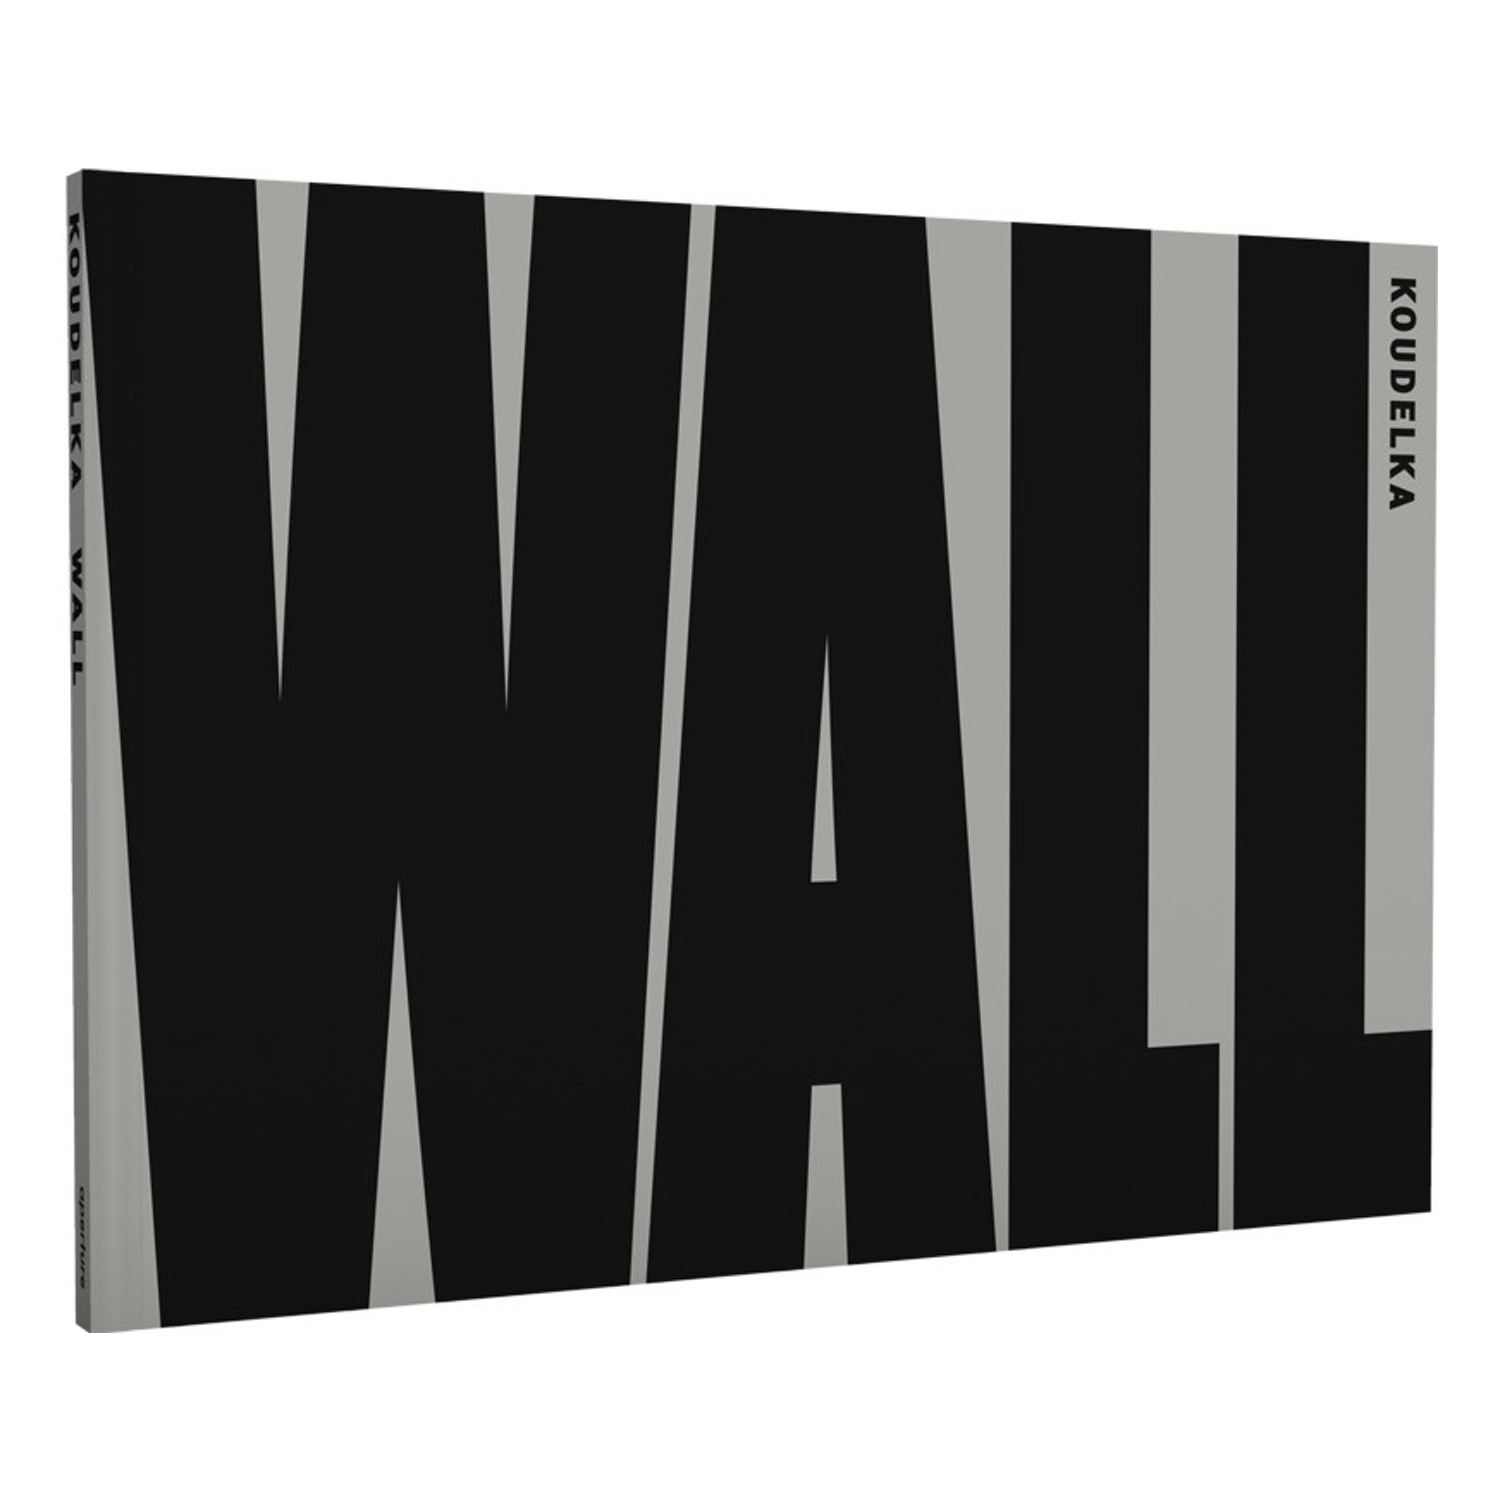 Koudelka - Wall